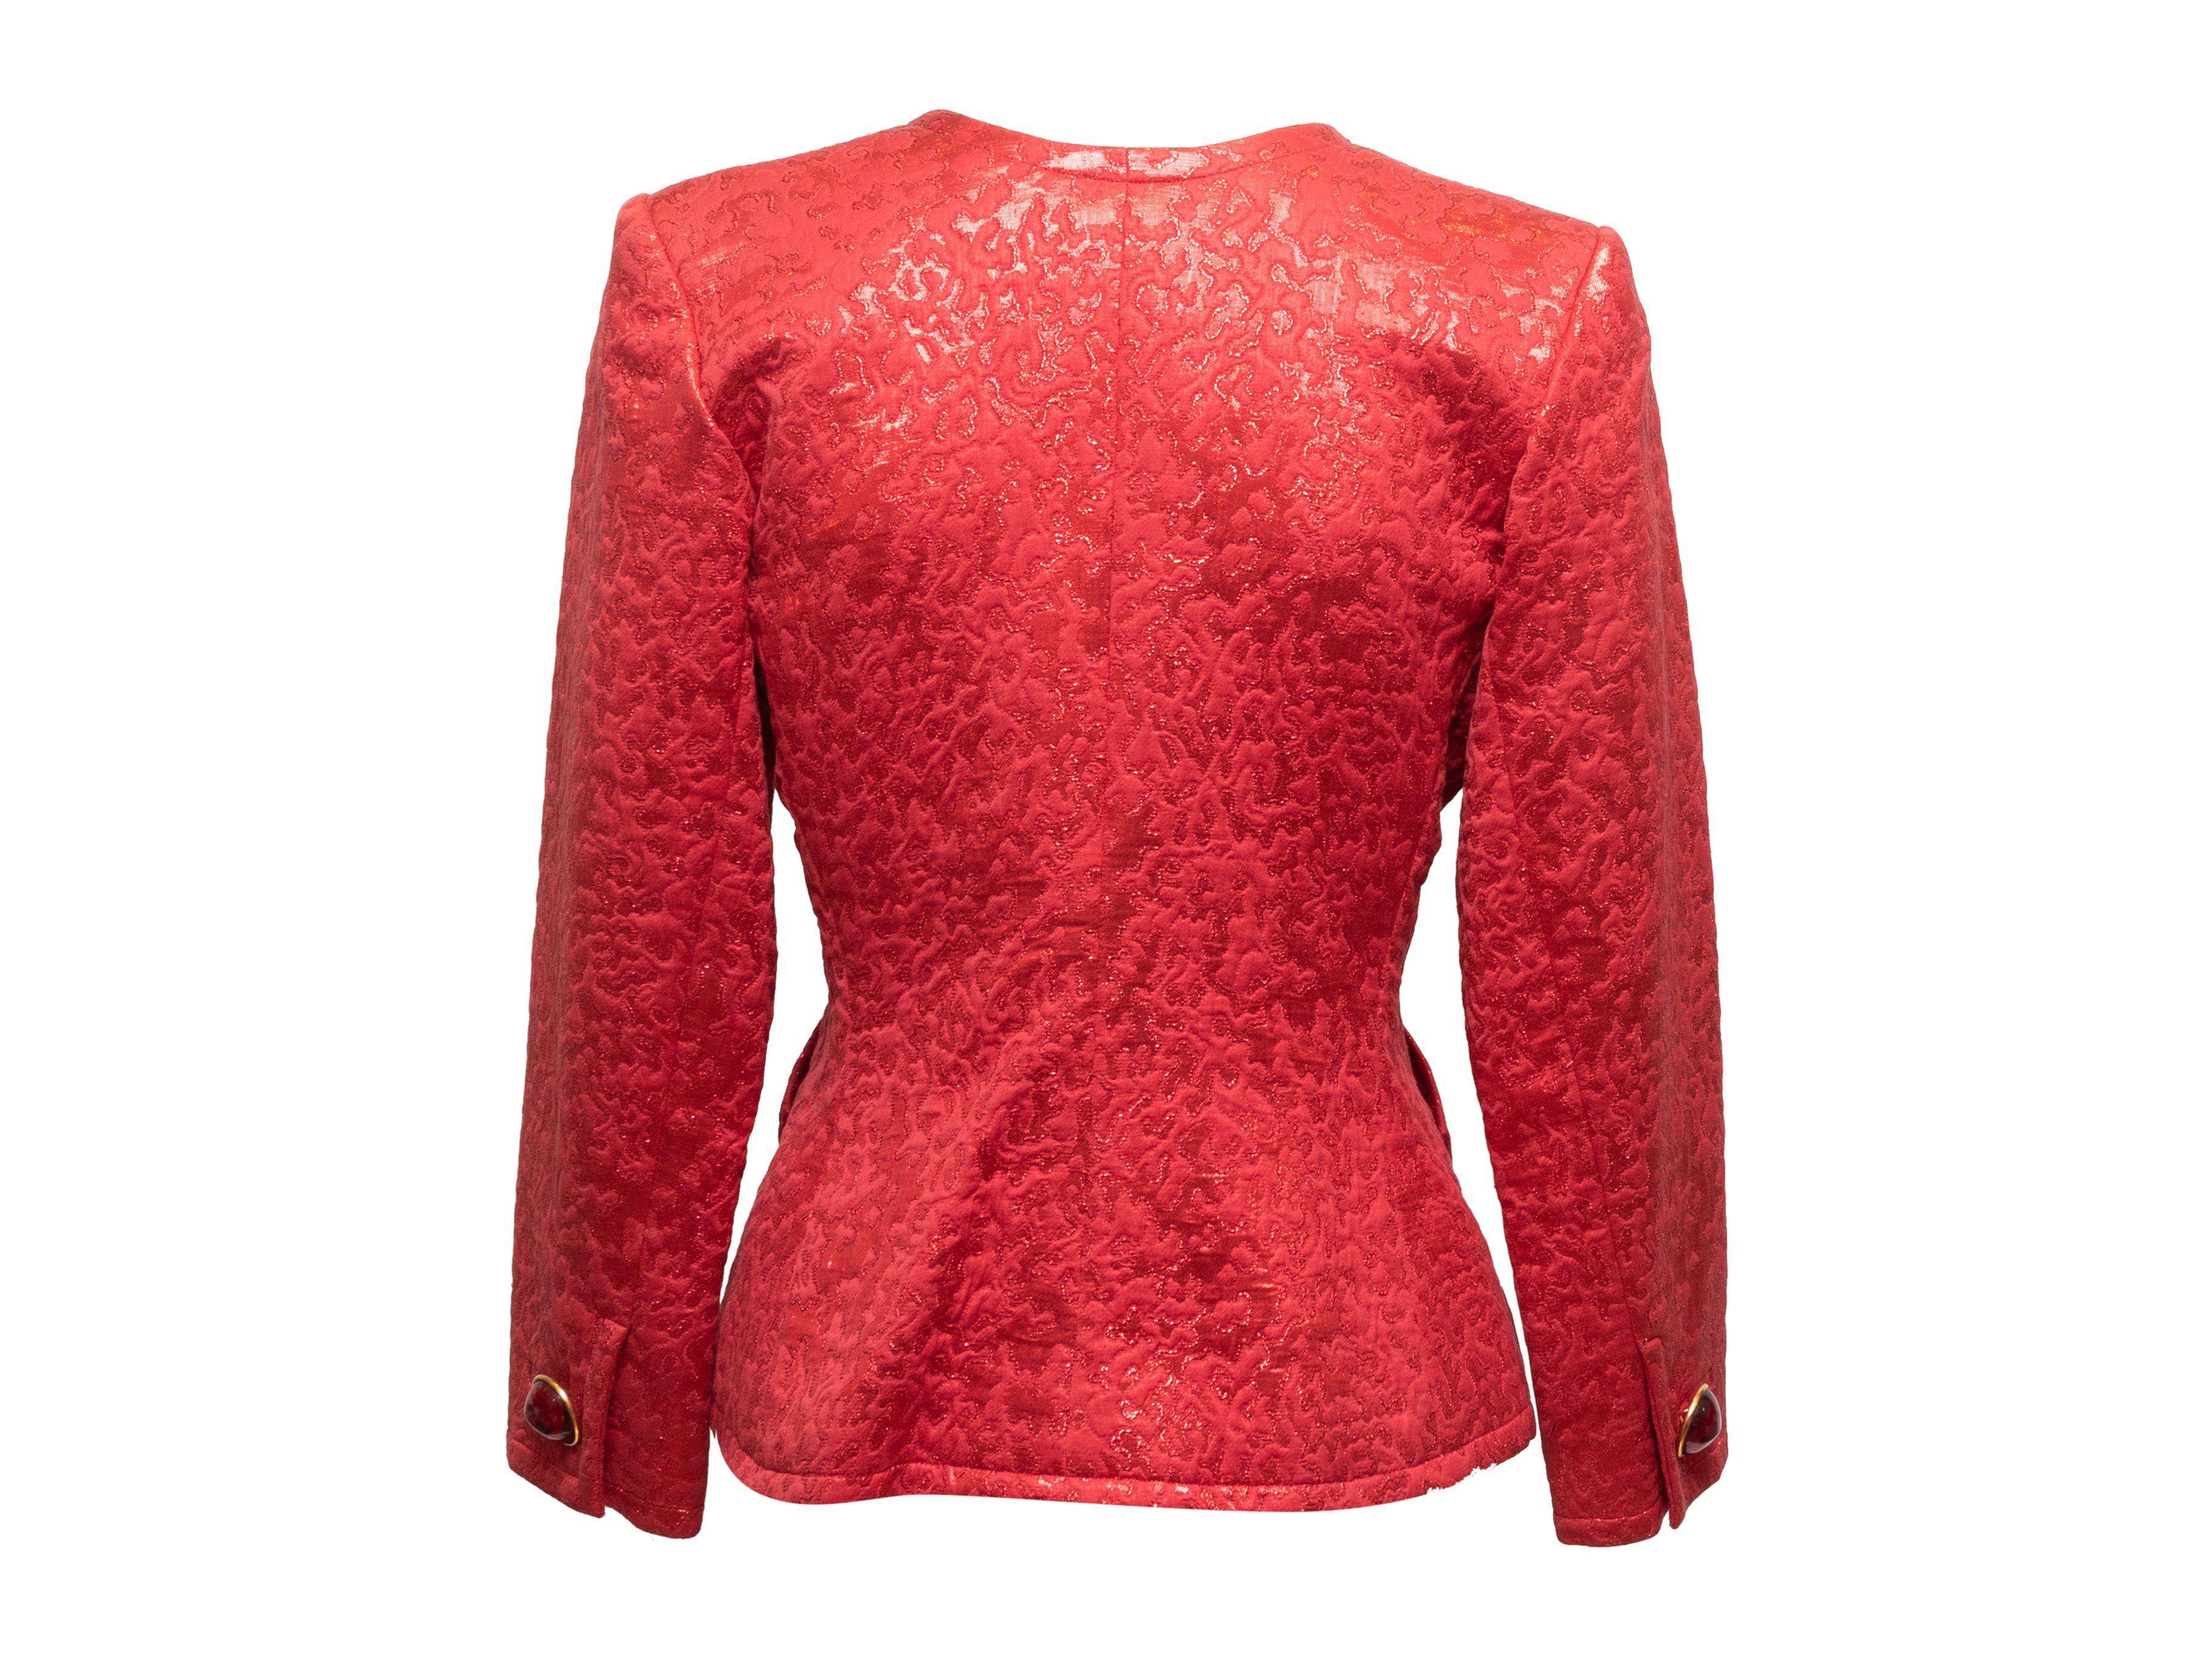 Yves Saint Laurent Red Metallic Jacquard Jacket 2